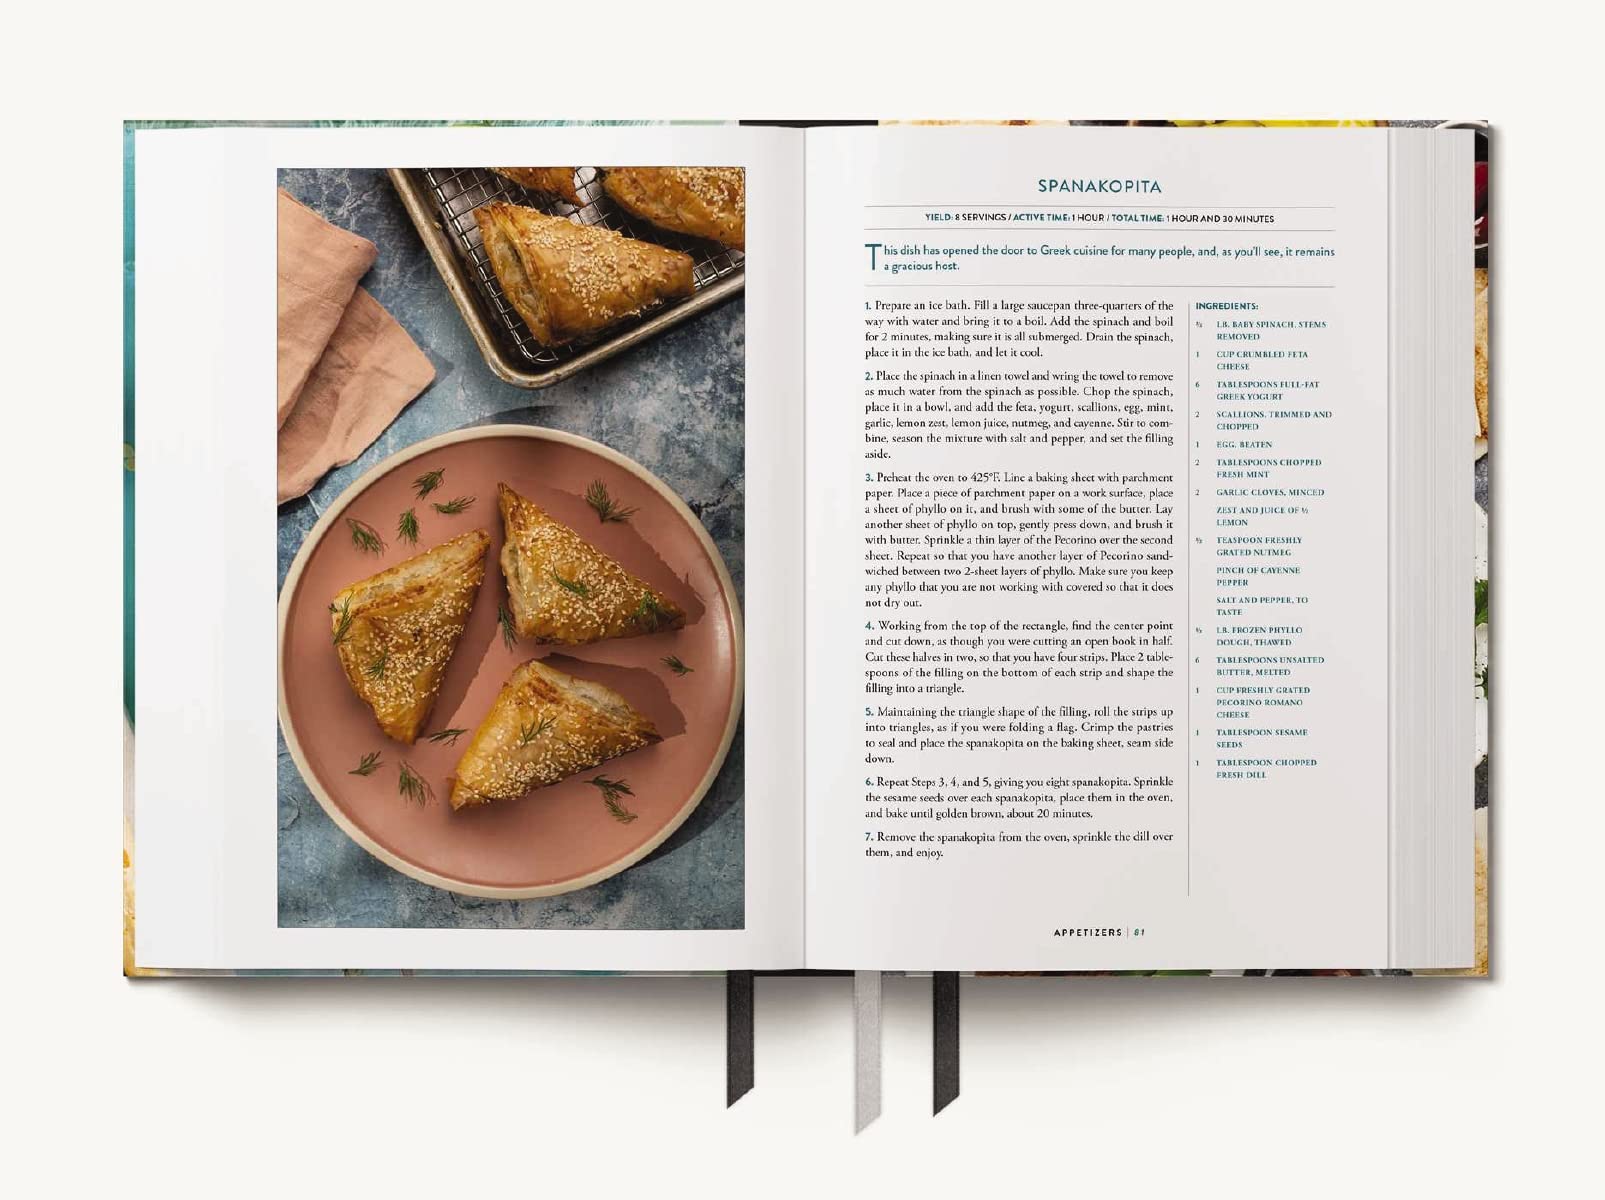 Mediterranean: The Ultimate Cookbook (Ultimate Cookbooks)